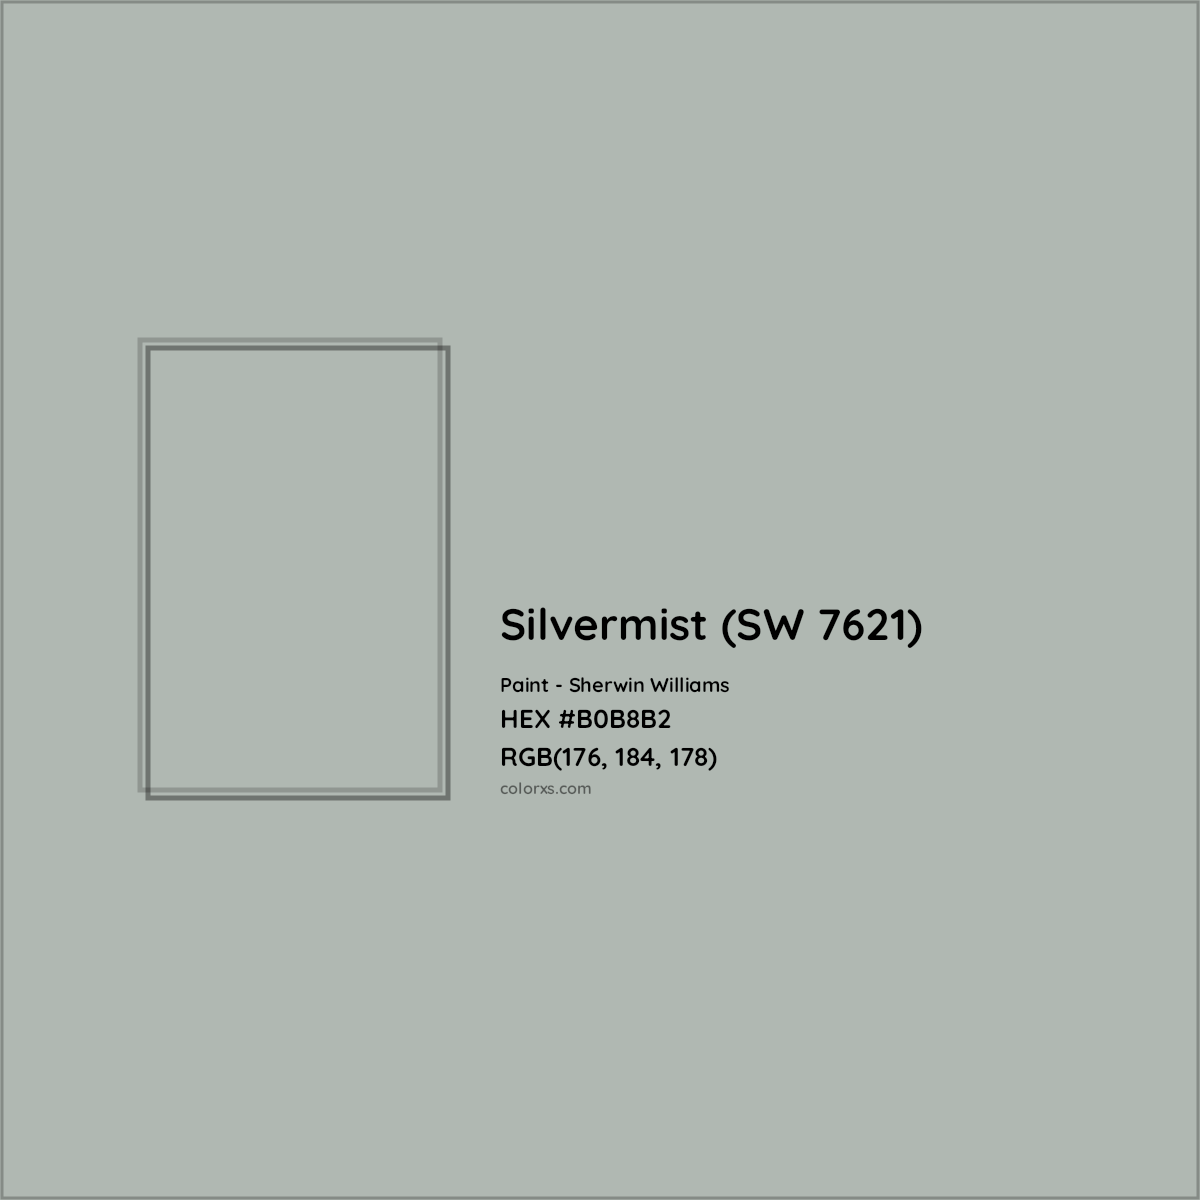 HEX #B0B8B2 Silvermist (SW 7621) Paint Sherwin Williams - Color Code